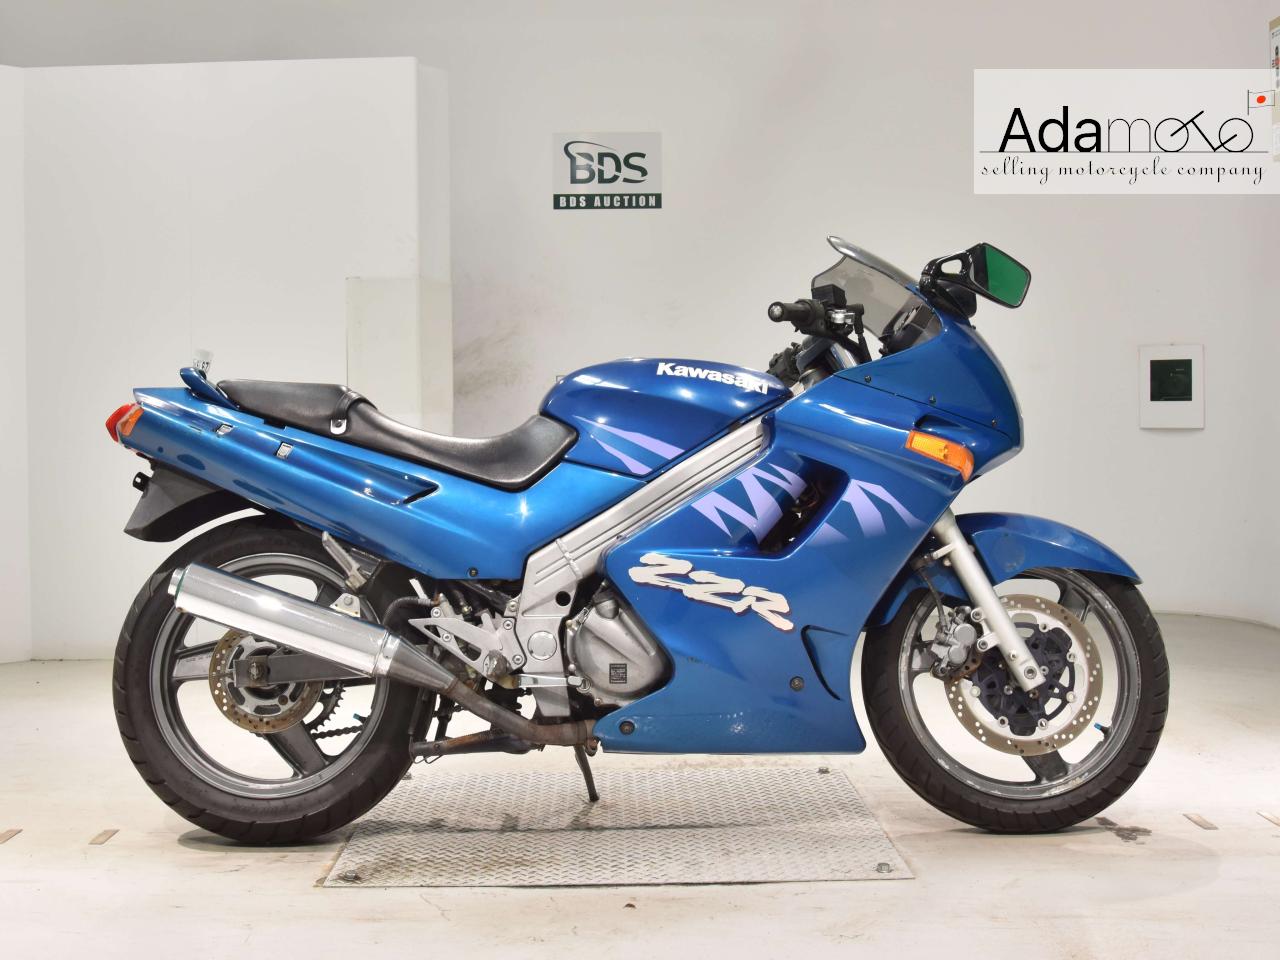 Kawasaki ZZ R250 - Adamoto - Motorcycles from Japan